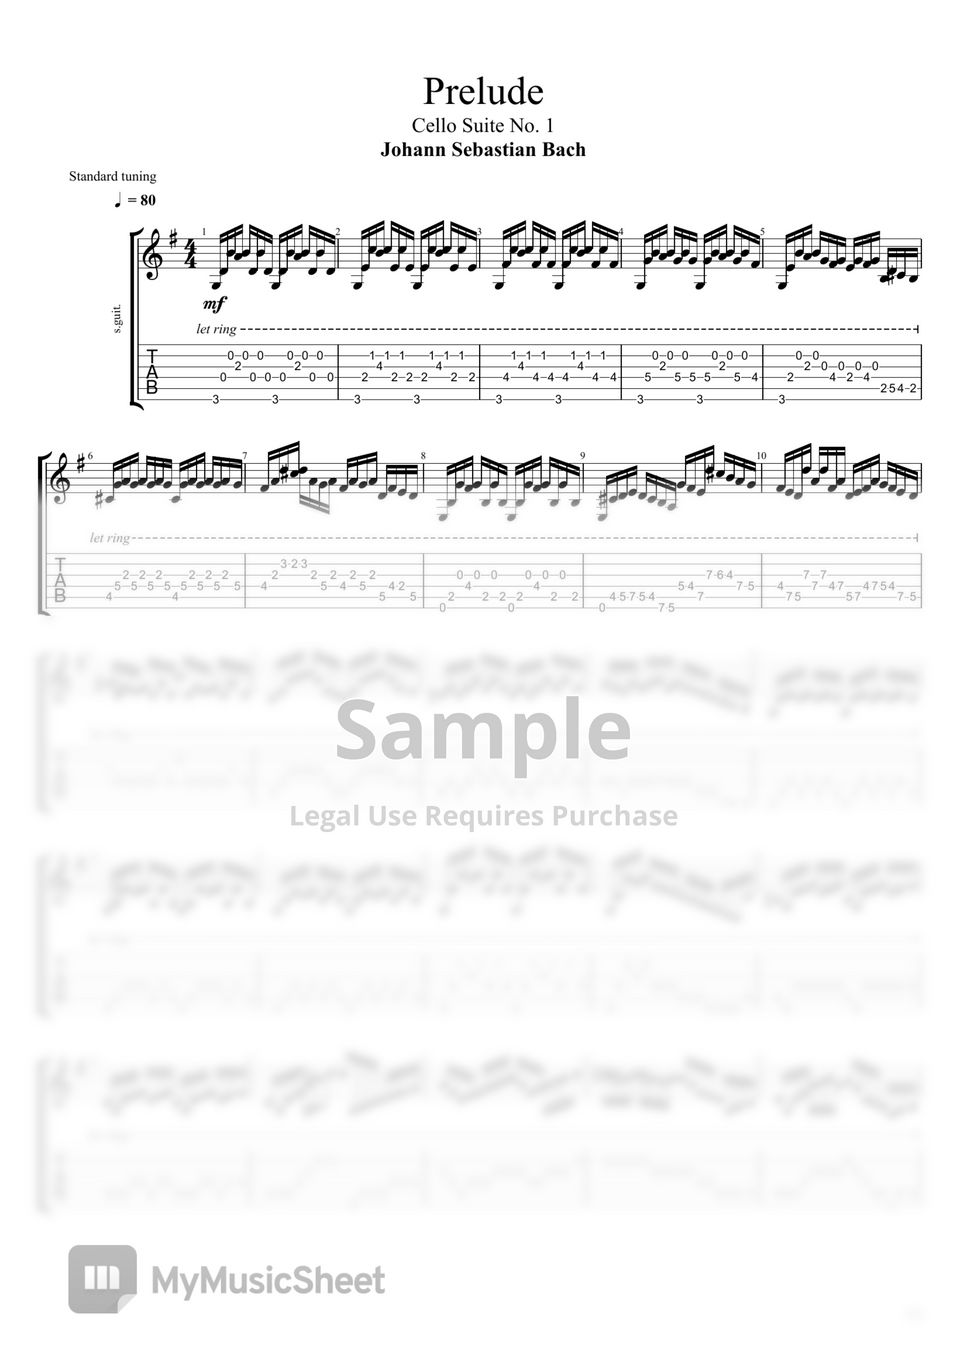 Bach - Prelude Cello Suite No. 01 BWV 1007 by Nico Music